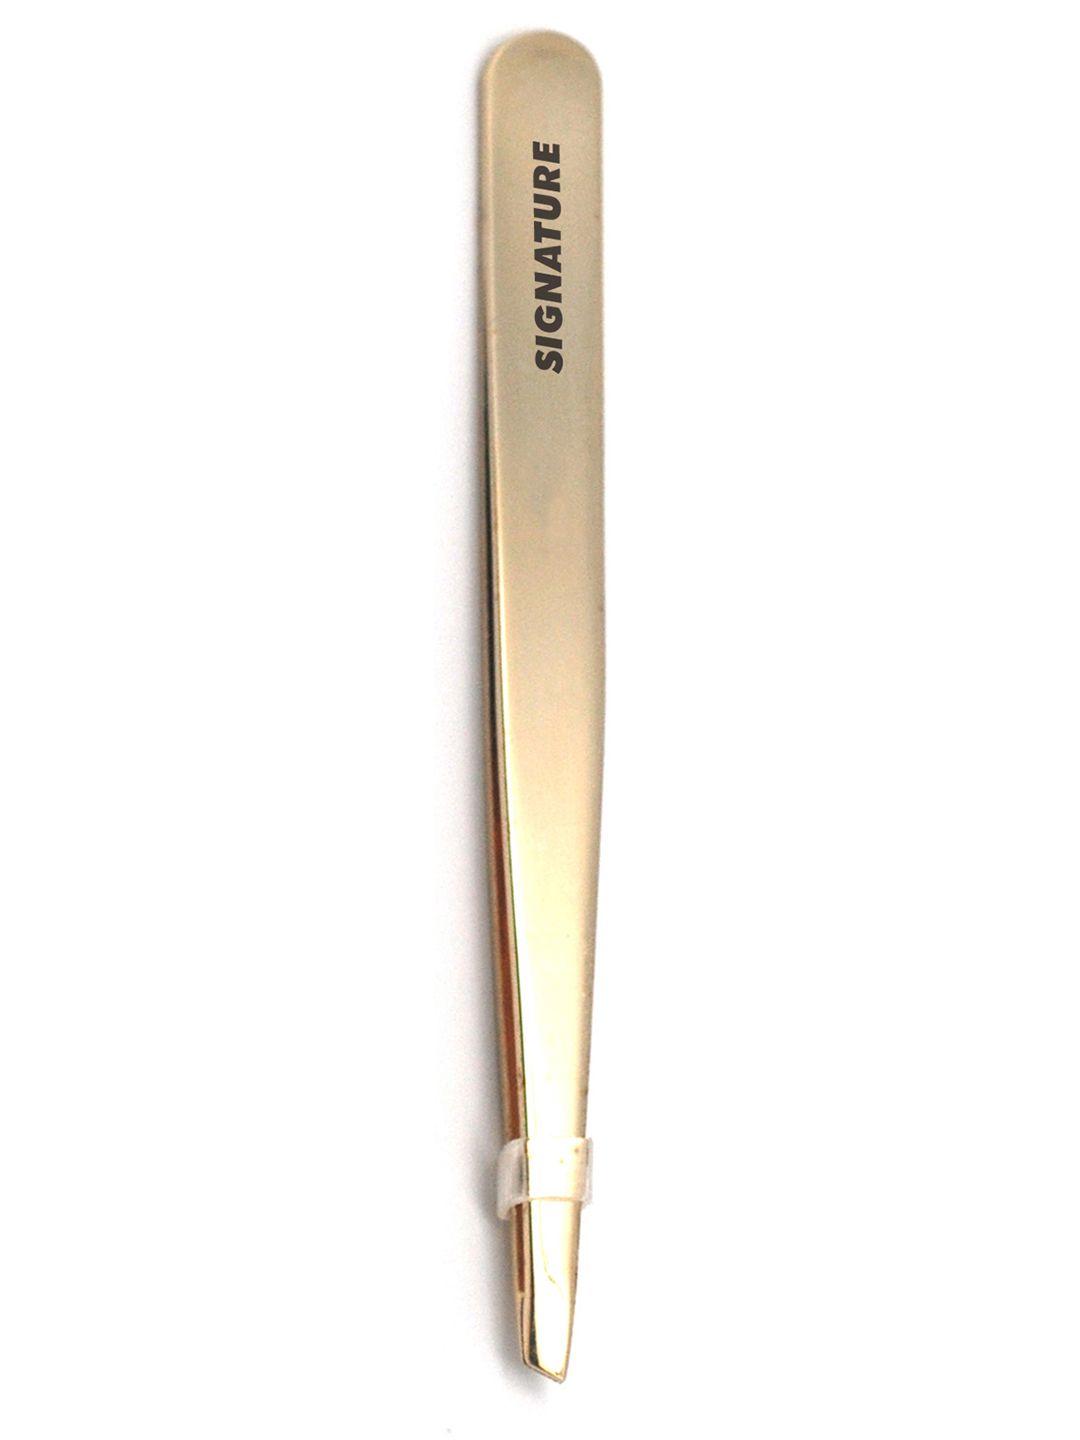 basicare-signature-gold-slant-tweezers-with-case